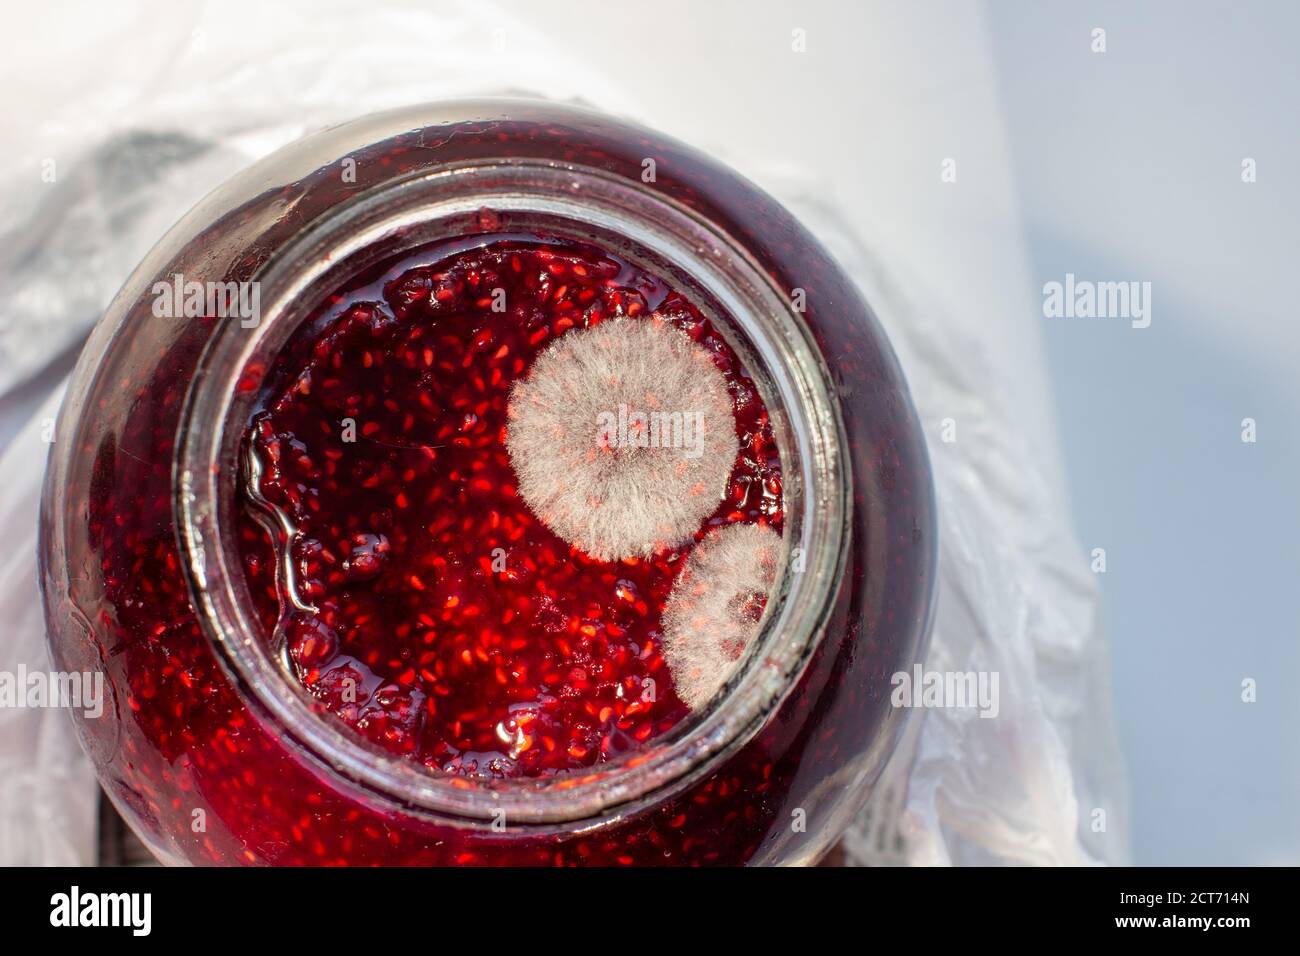 Mold in a jar of raspberry jam. Hazardous to health.  Stock Photo